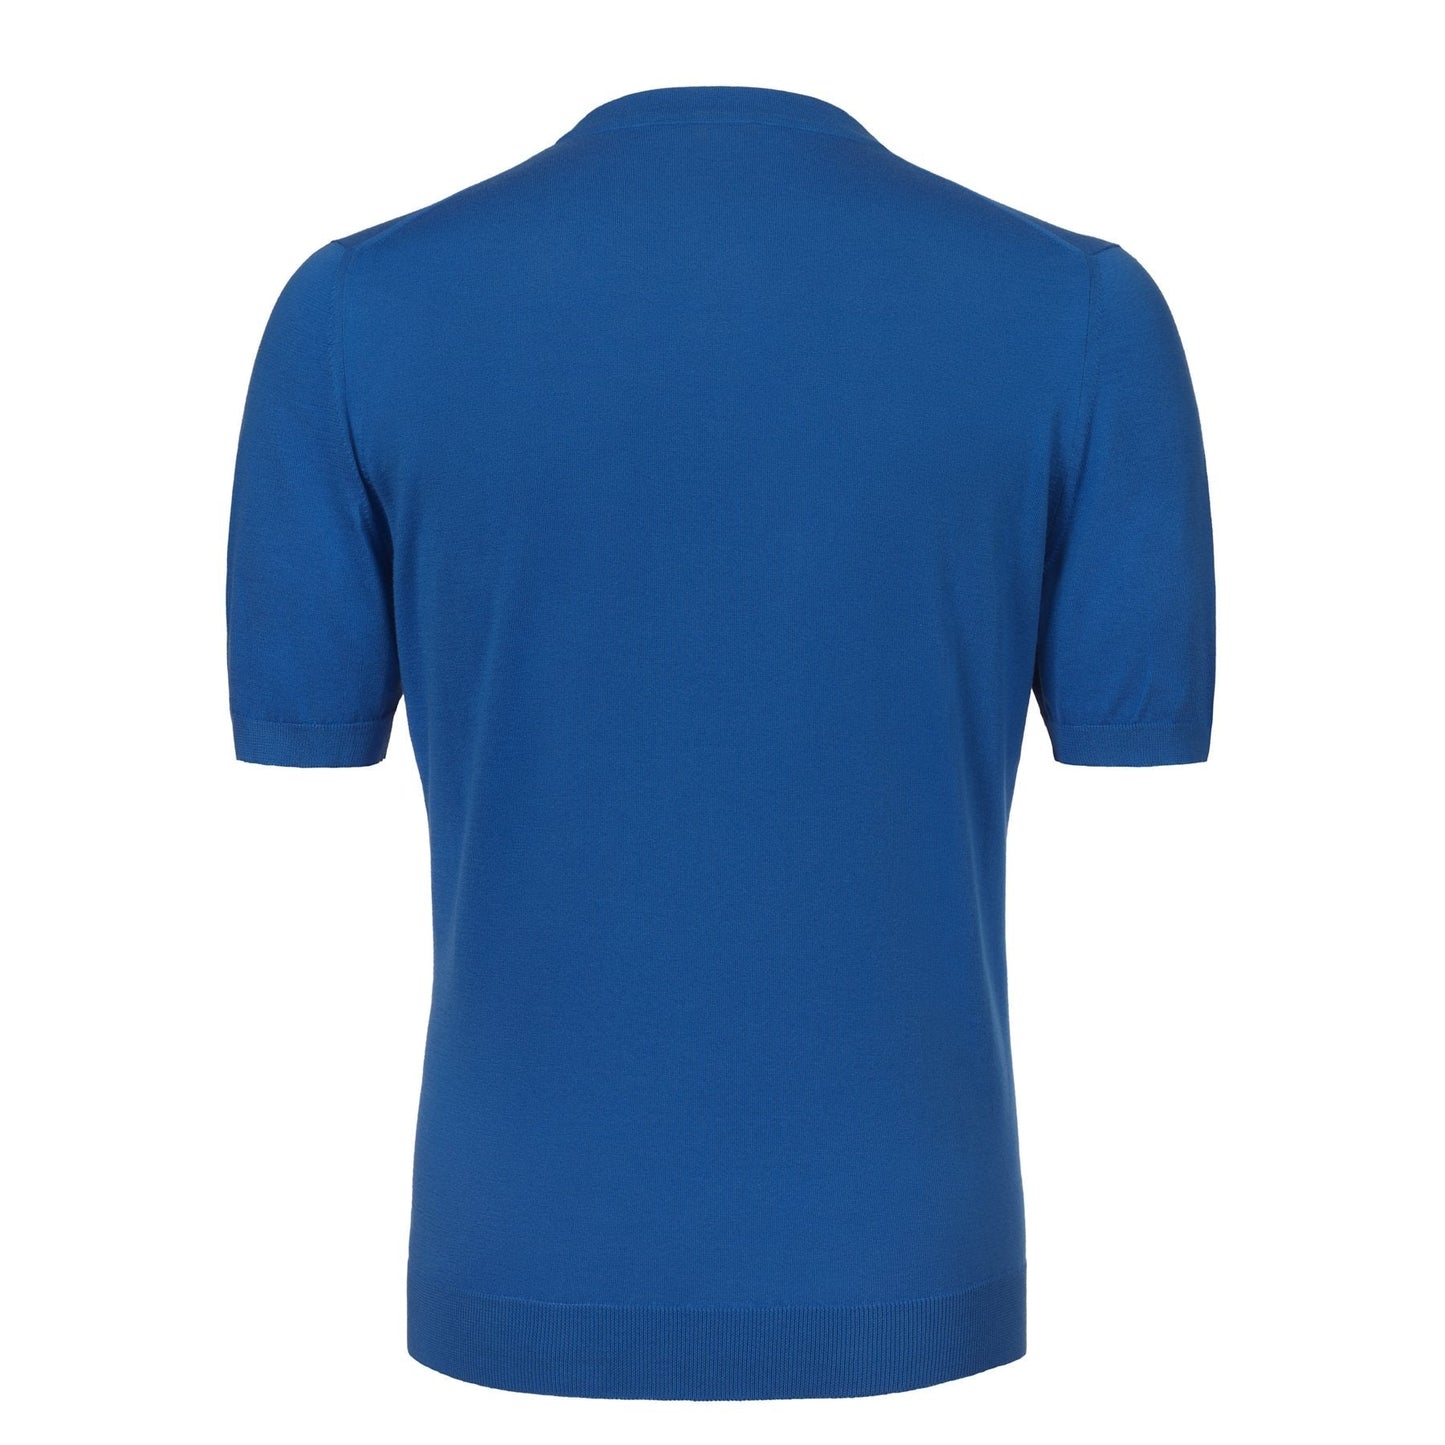 Svevo Slim-Fit Crew-Neck Blue T-Shirt - SARTALE